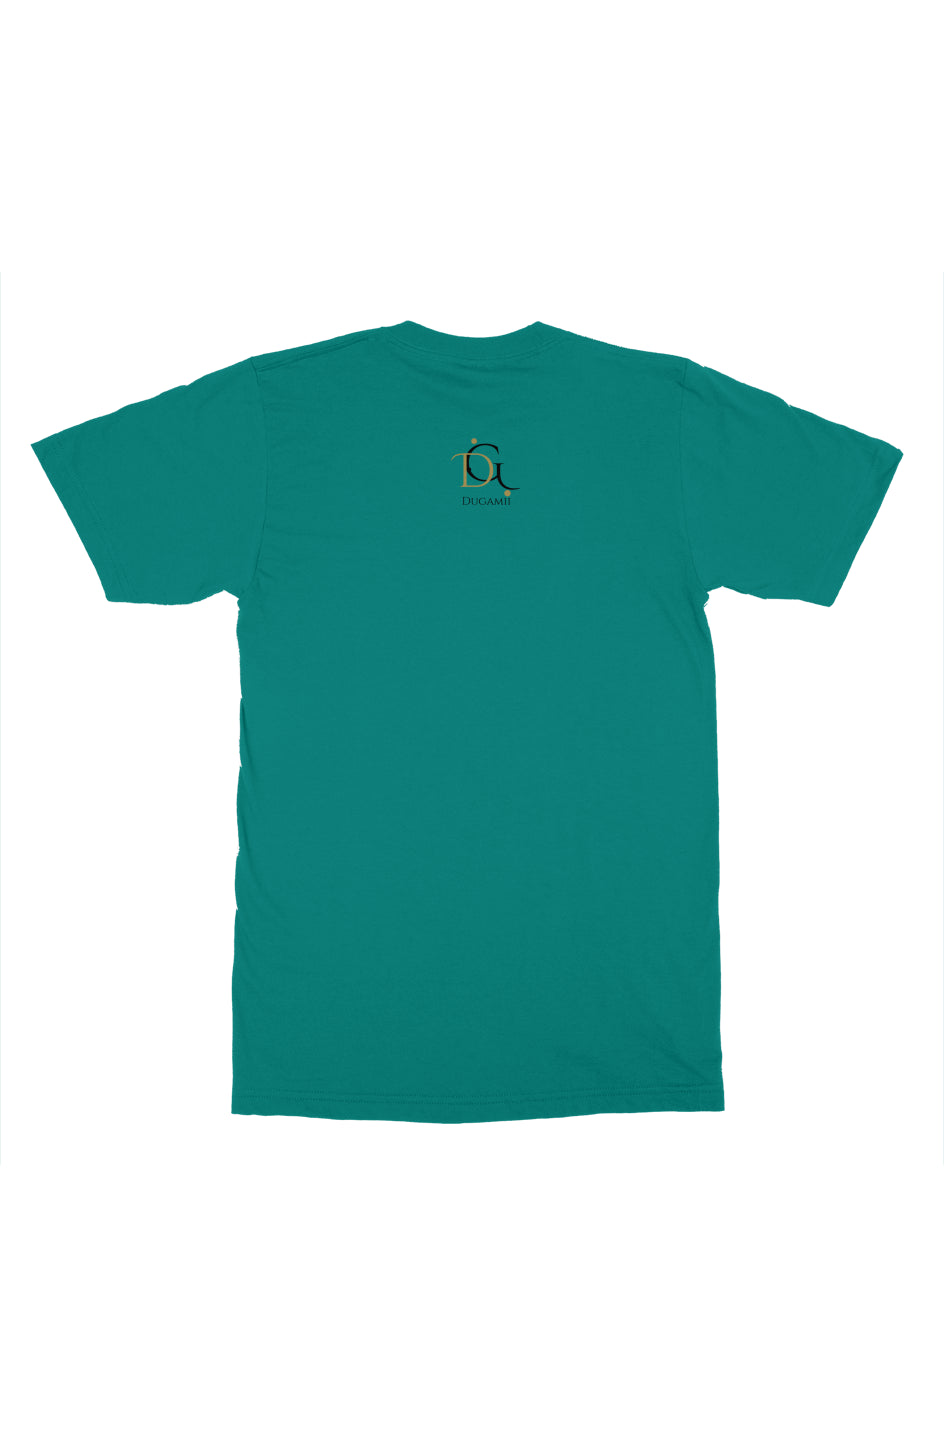 Men's DuGamii Lock and Key Tropical Blue T-Shirt